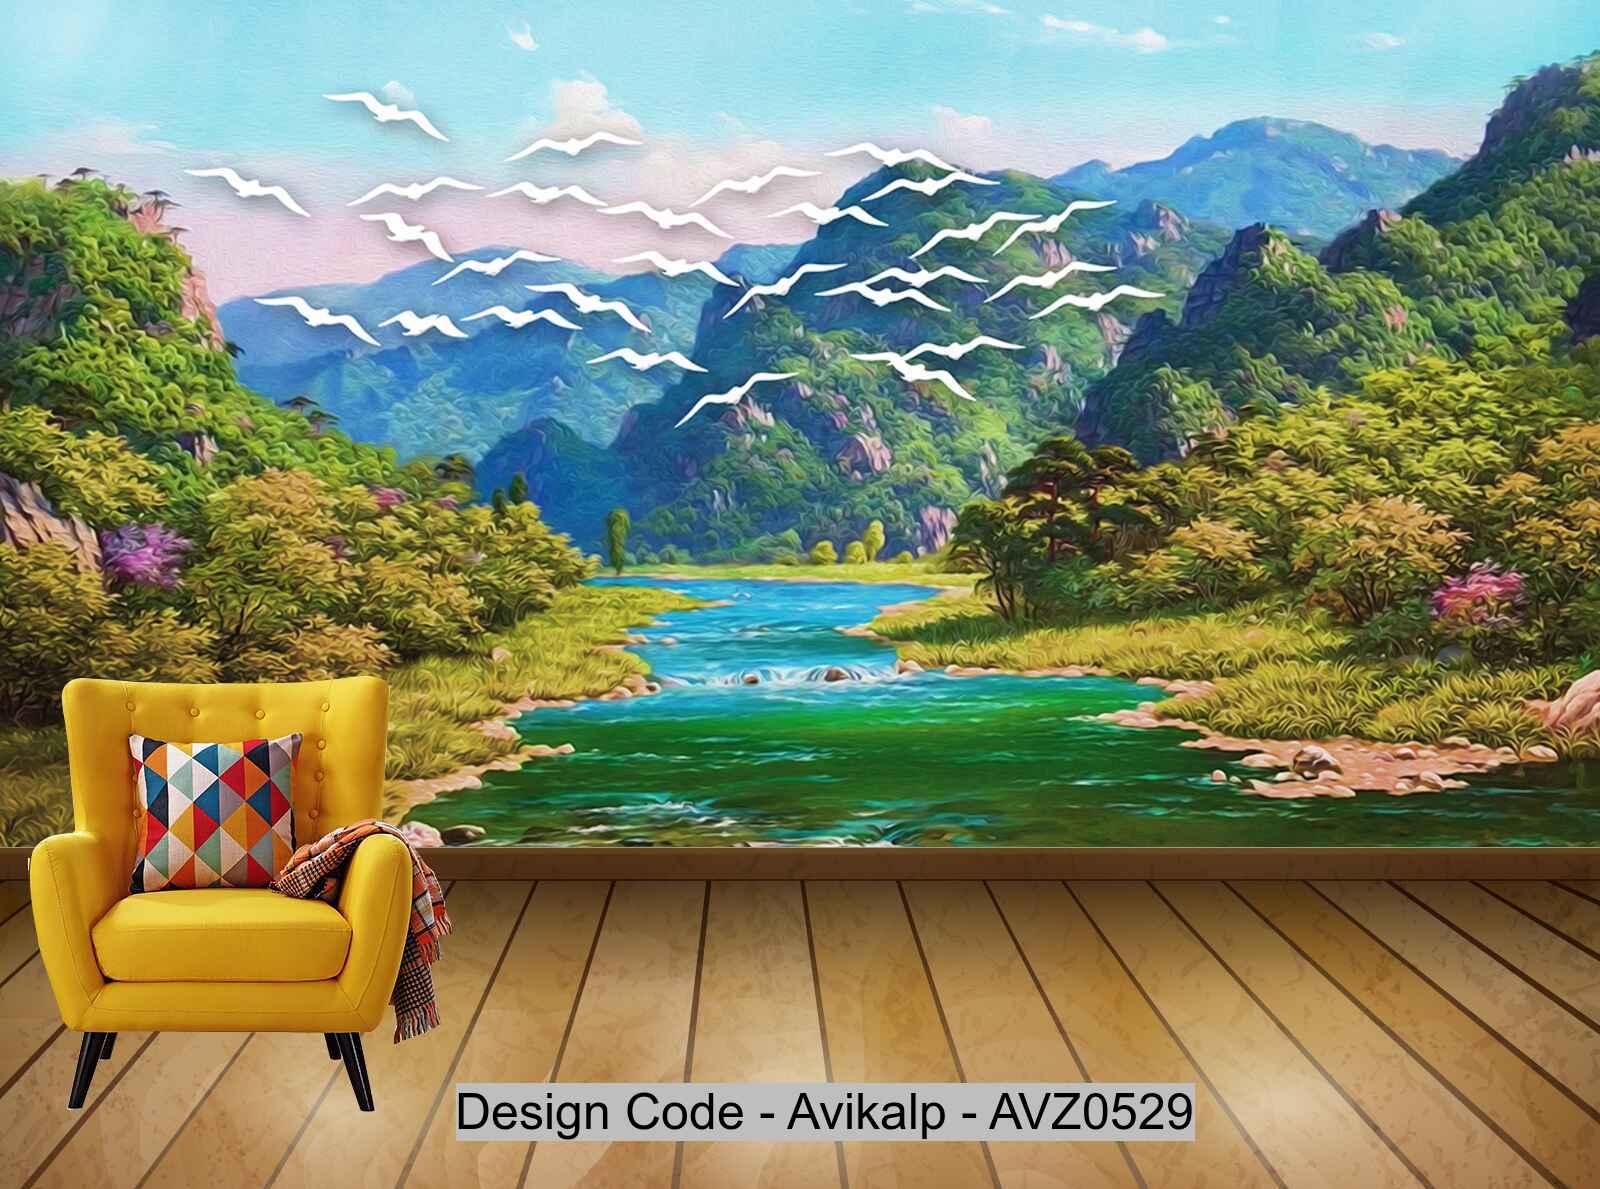 Avikalp Exclusive Avz0529 Modern Beautiful Landscape Scenery Oil